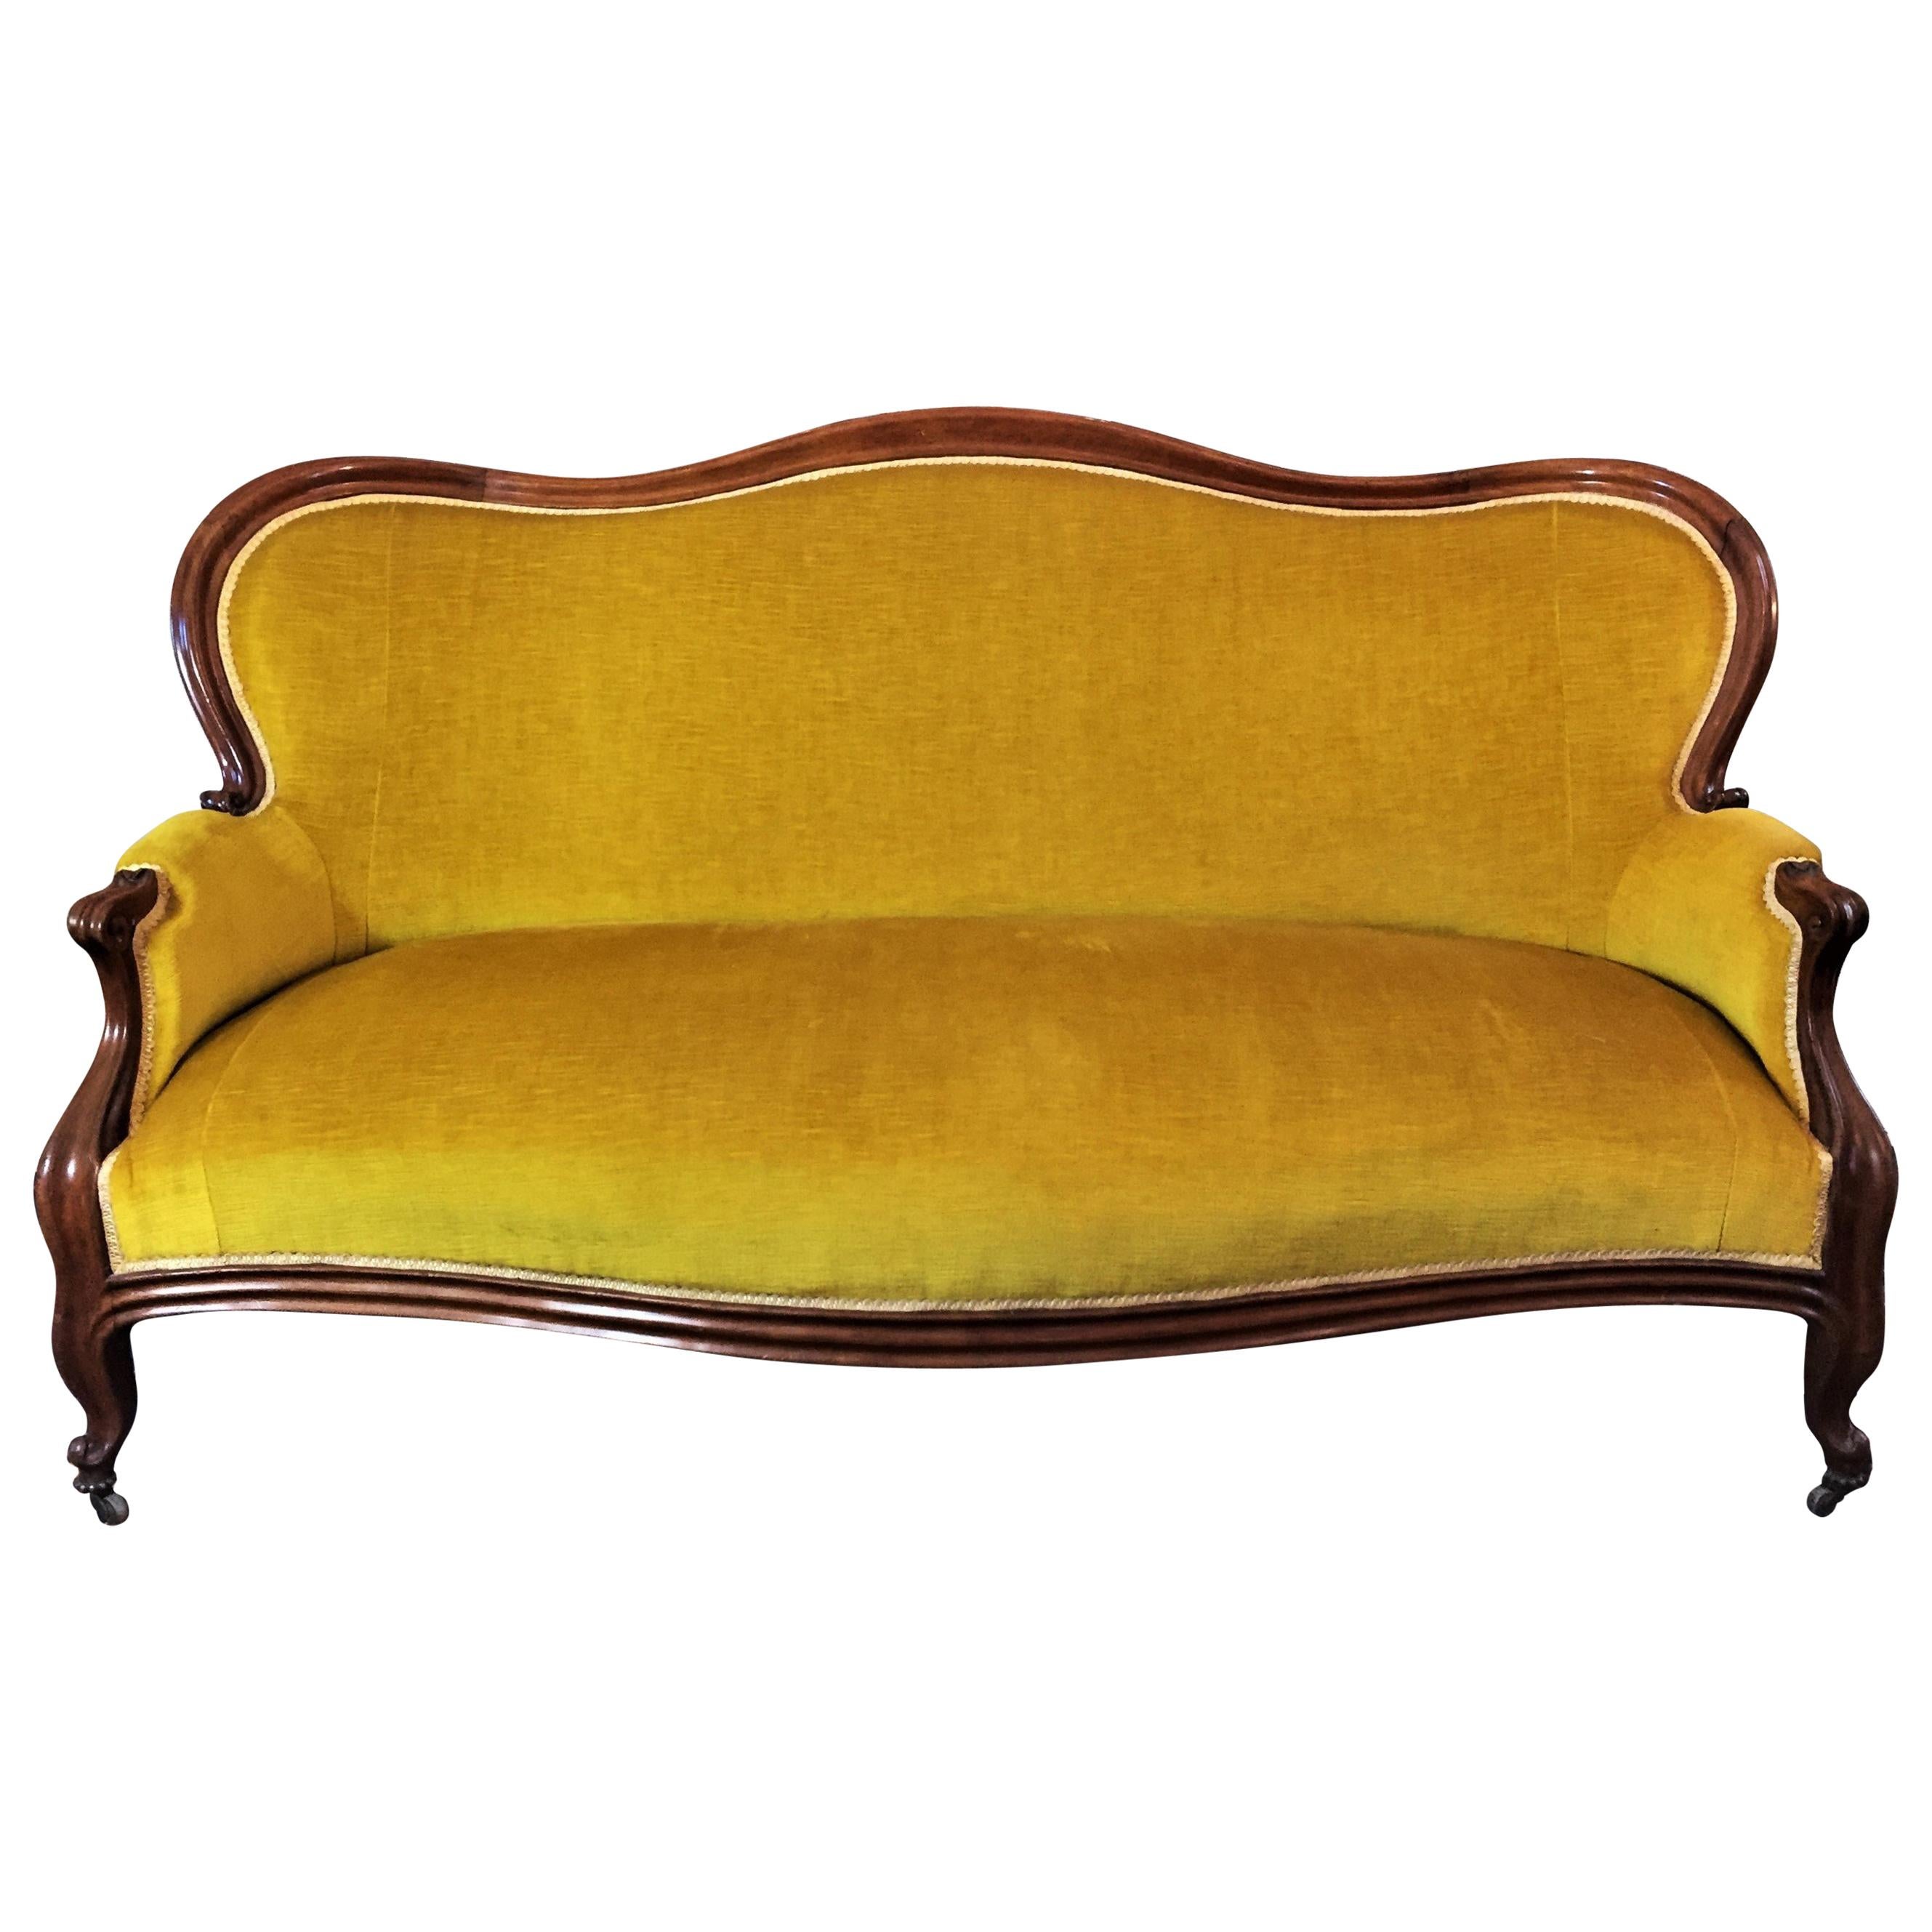 Louis XV Style Bench Mahogany and Yellow Velvet Louis-Philippe Period circa 1840